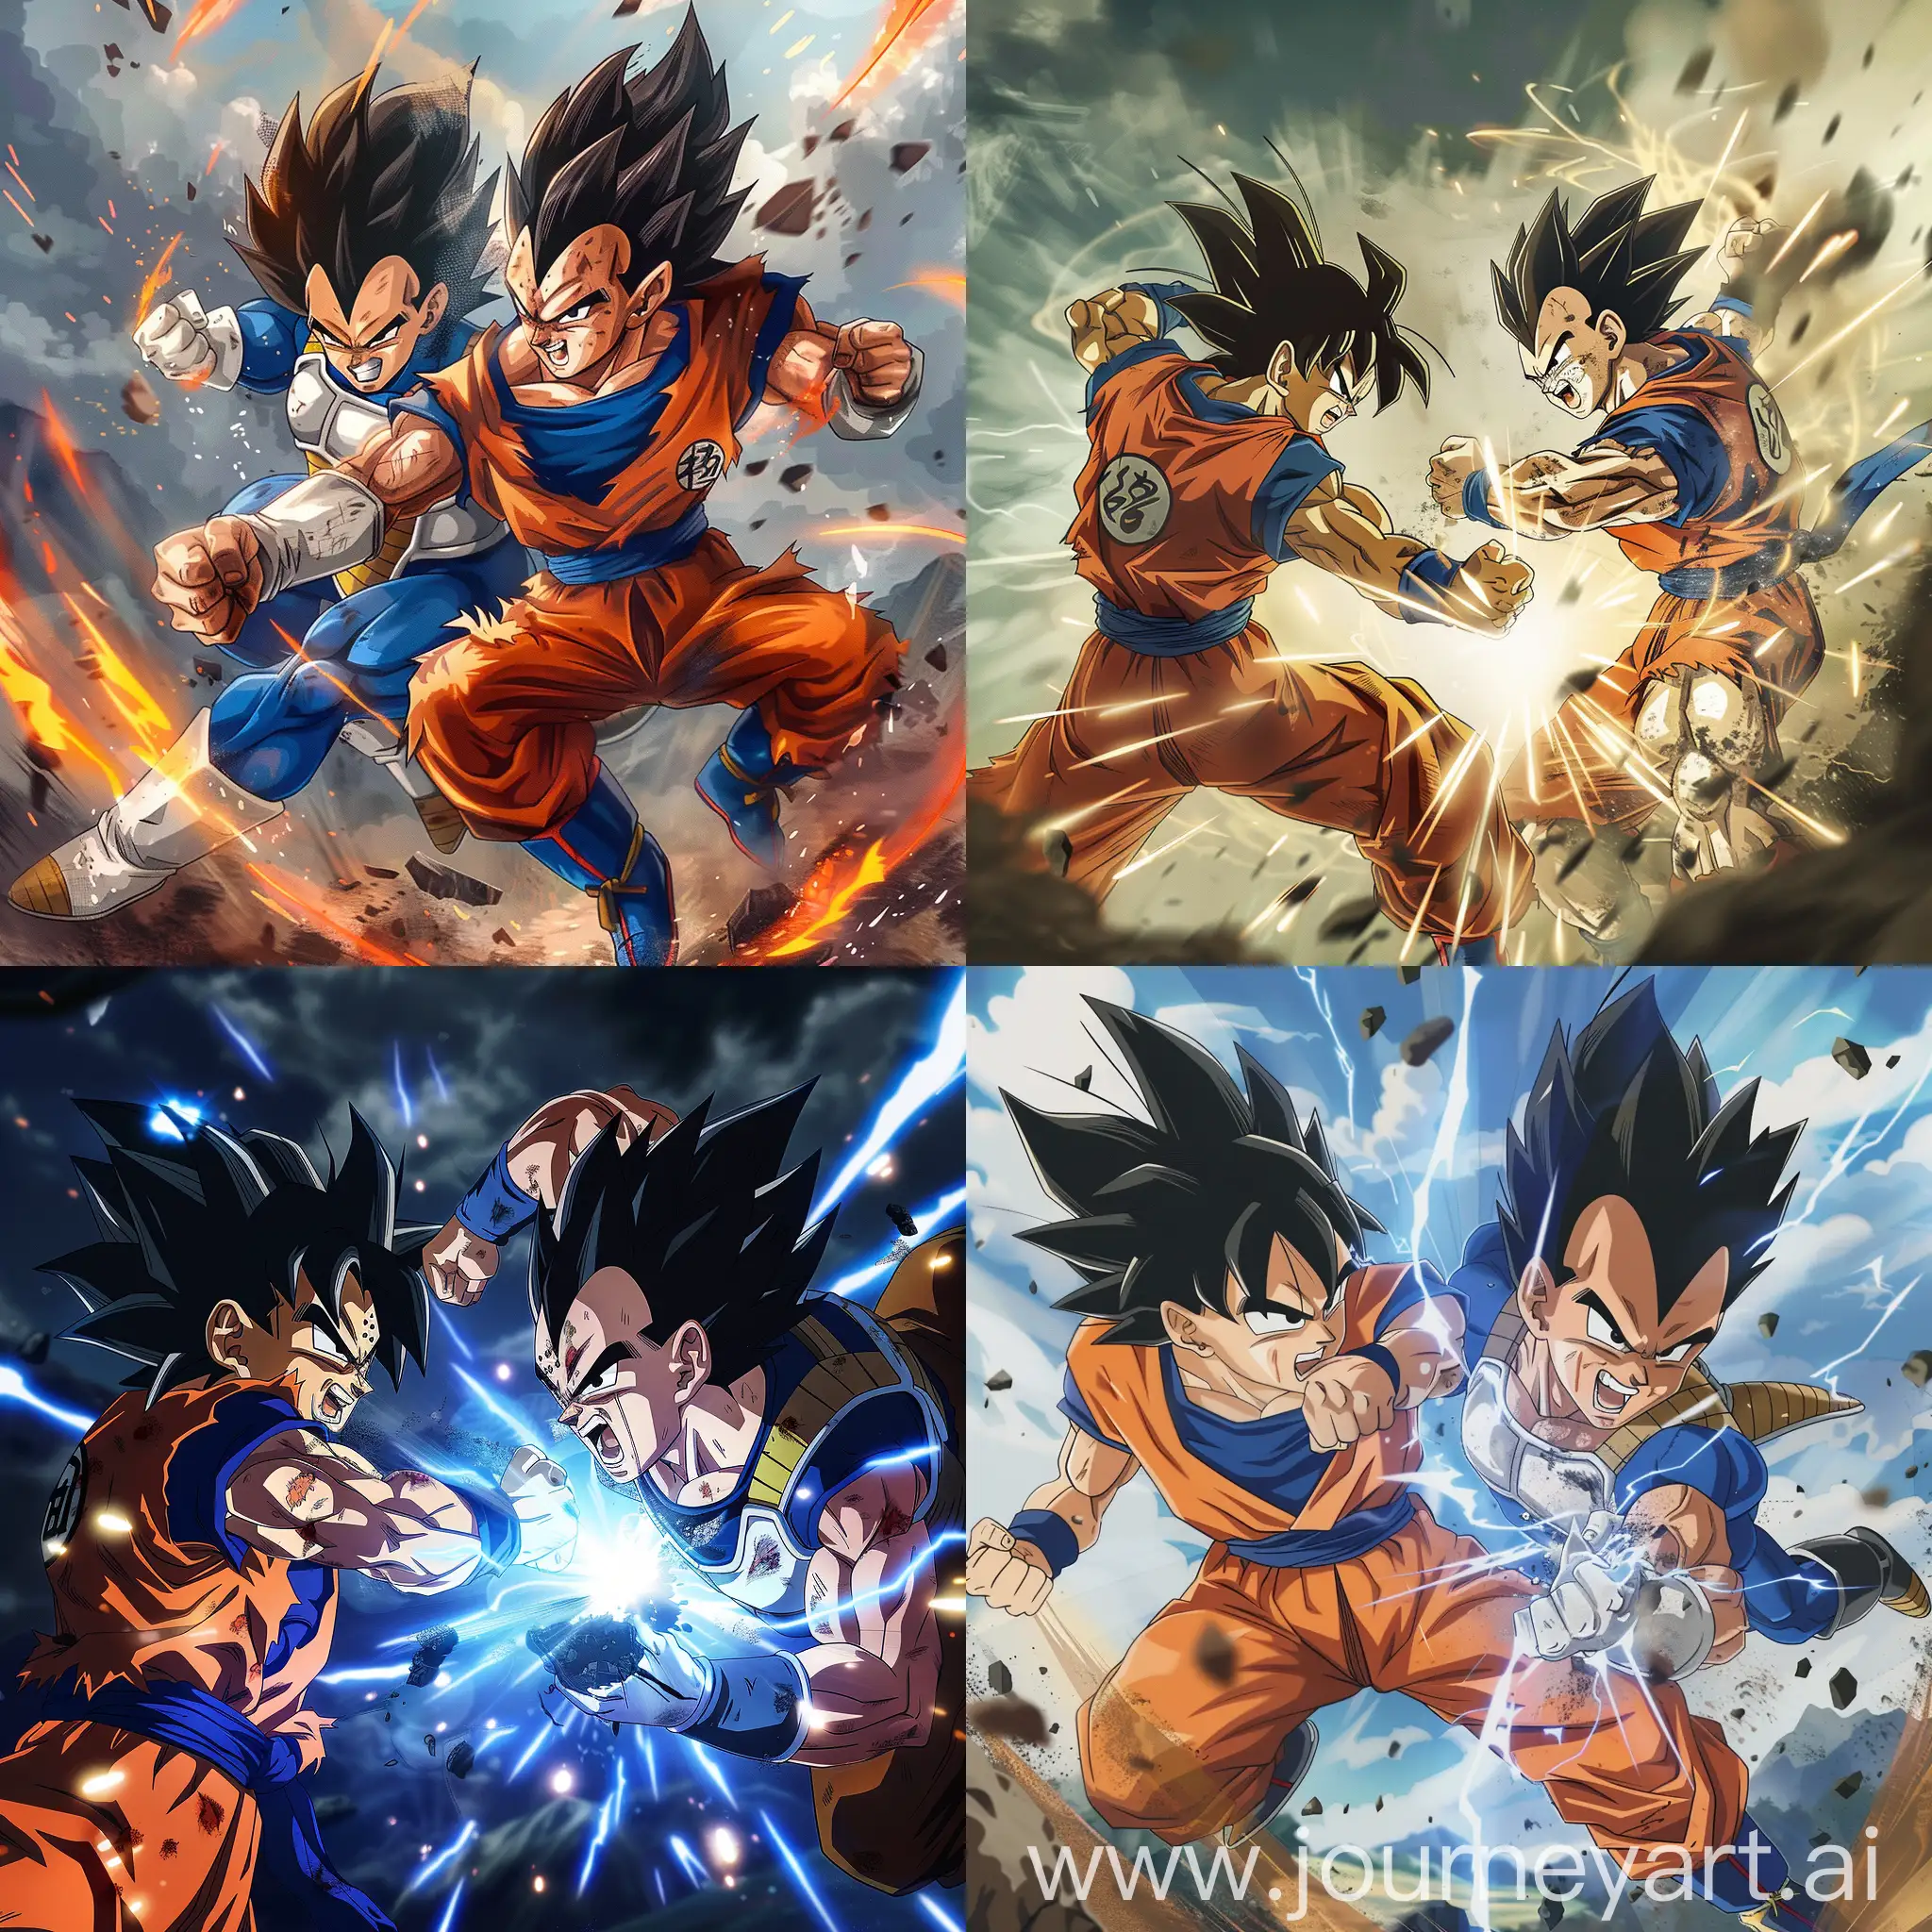 Epic-Battle-Goku-vs-Vegeta-in-Ultimate-Combat